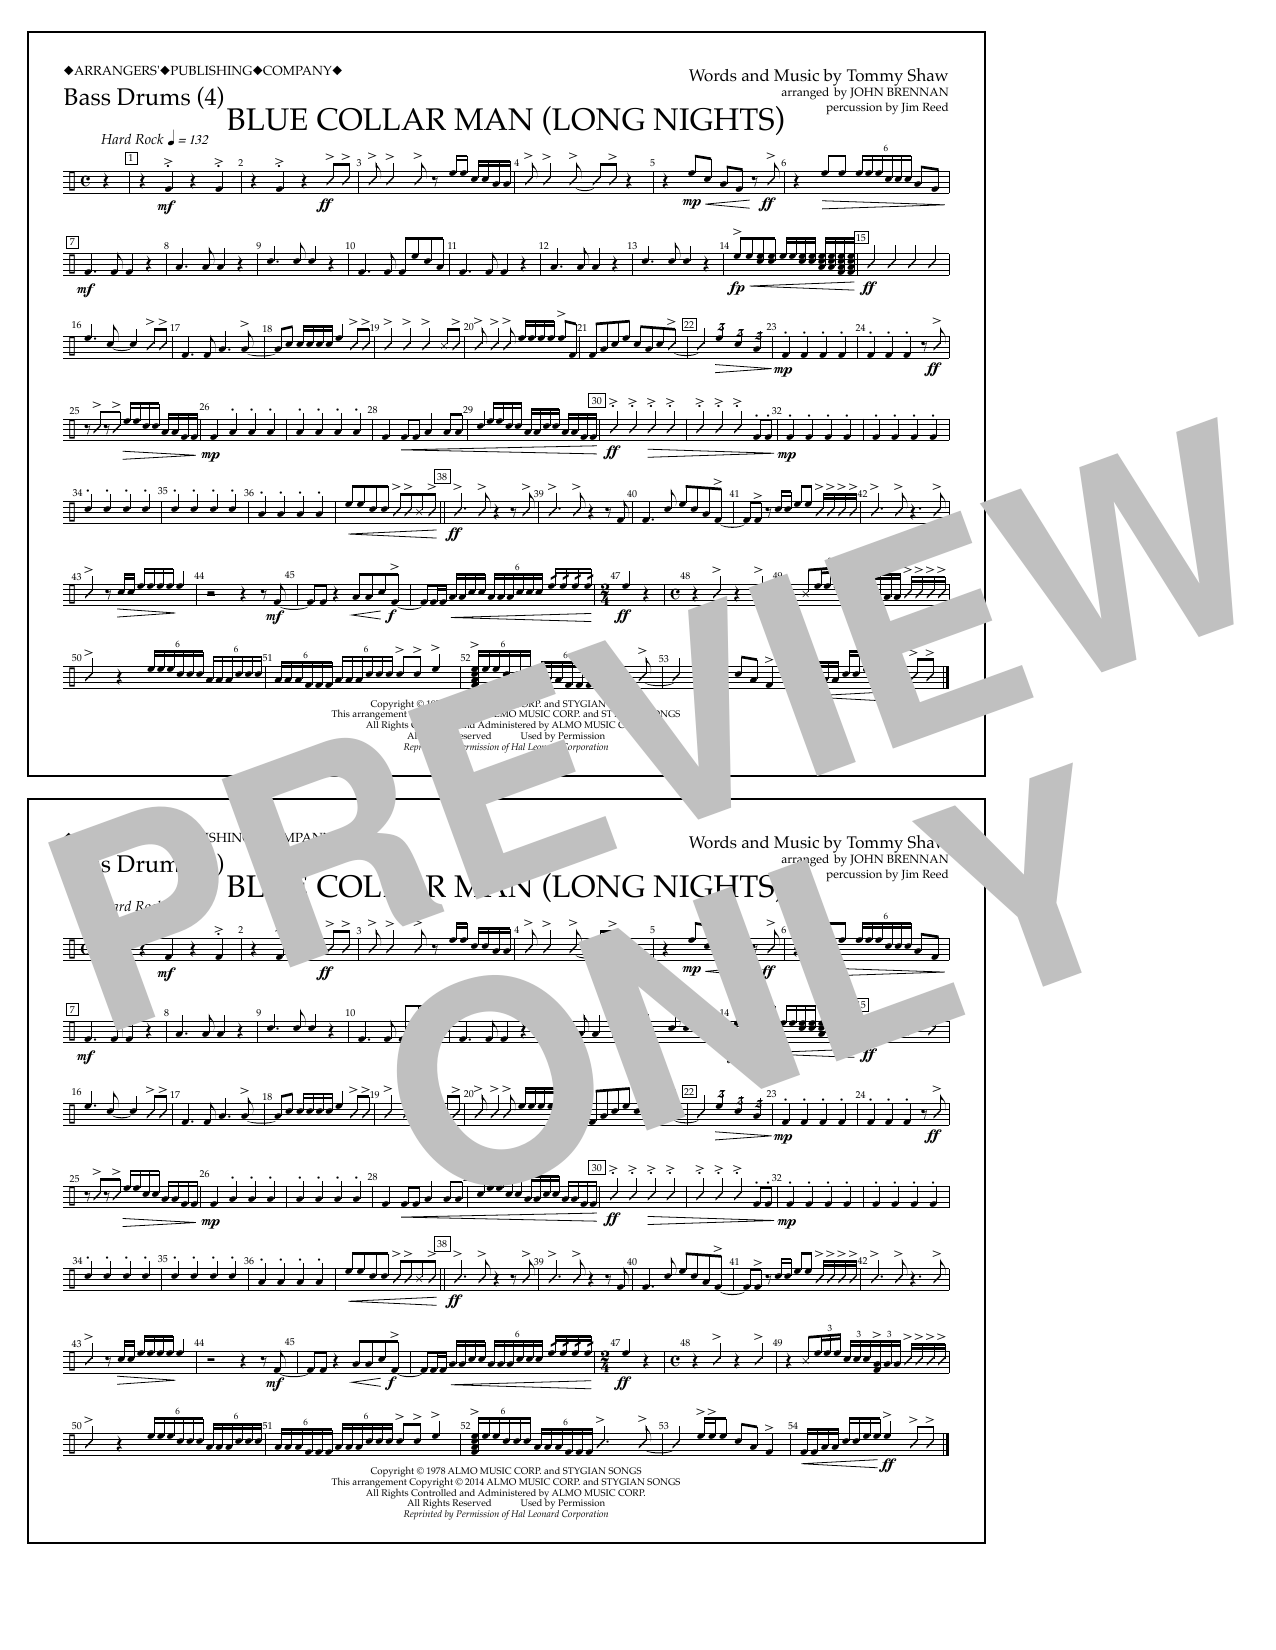 John Brennan Blue Collar Man (Long Nights) - Bass Drums Sheet Music Notes & Chords for Marching Band - Download or Print PDF